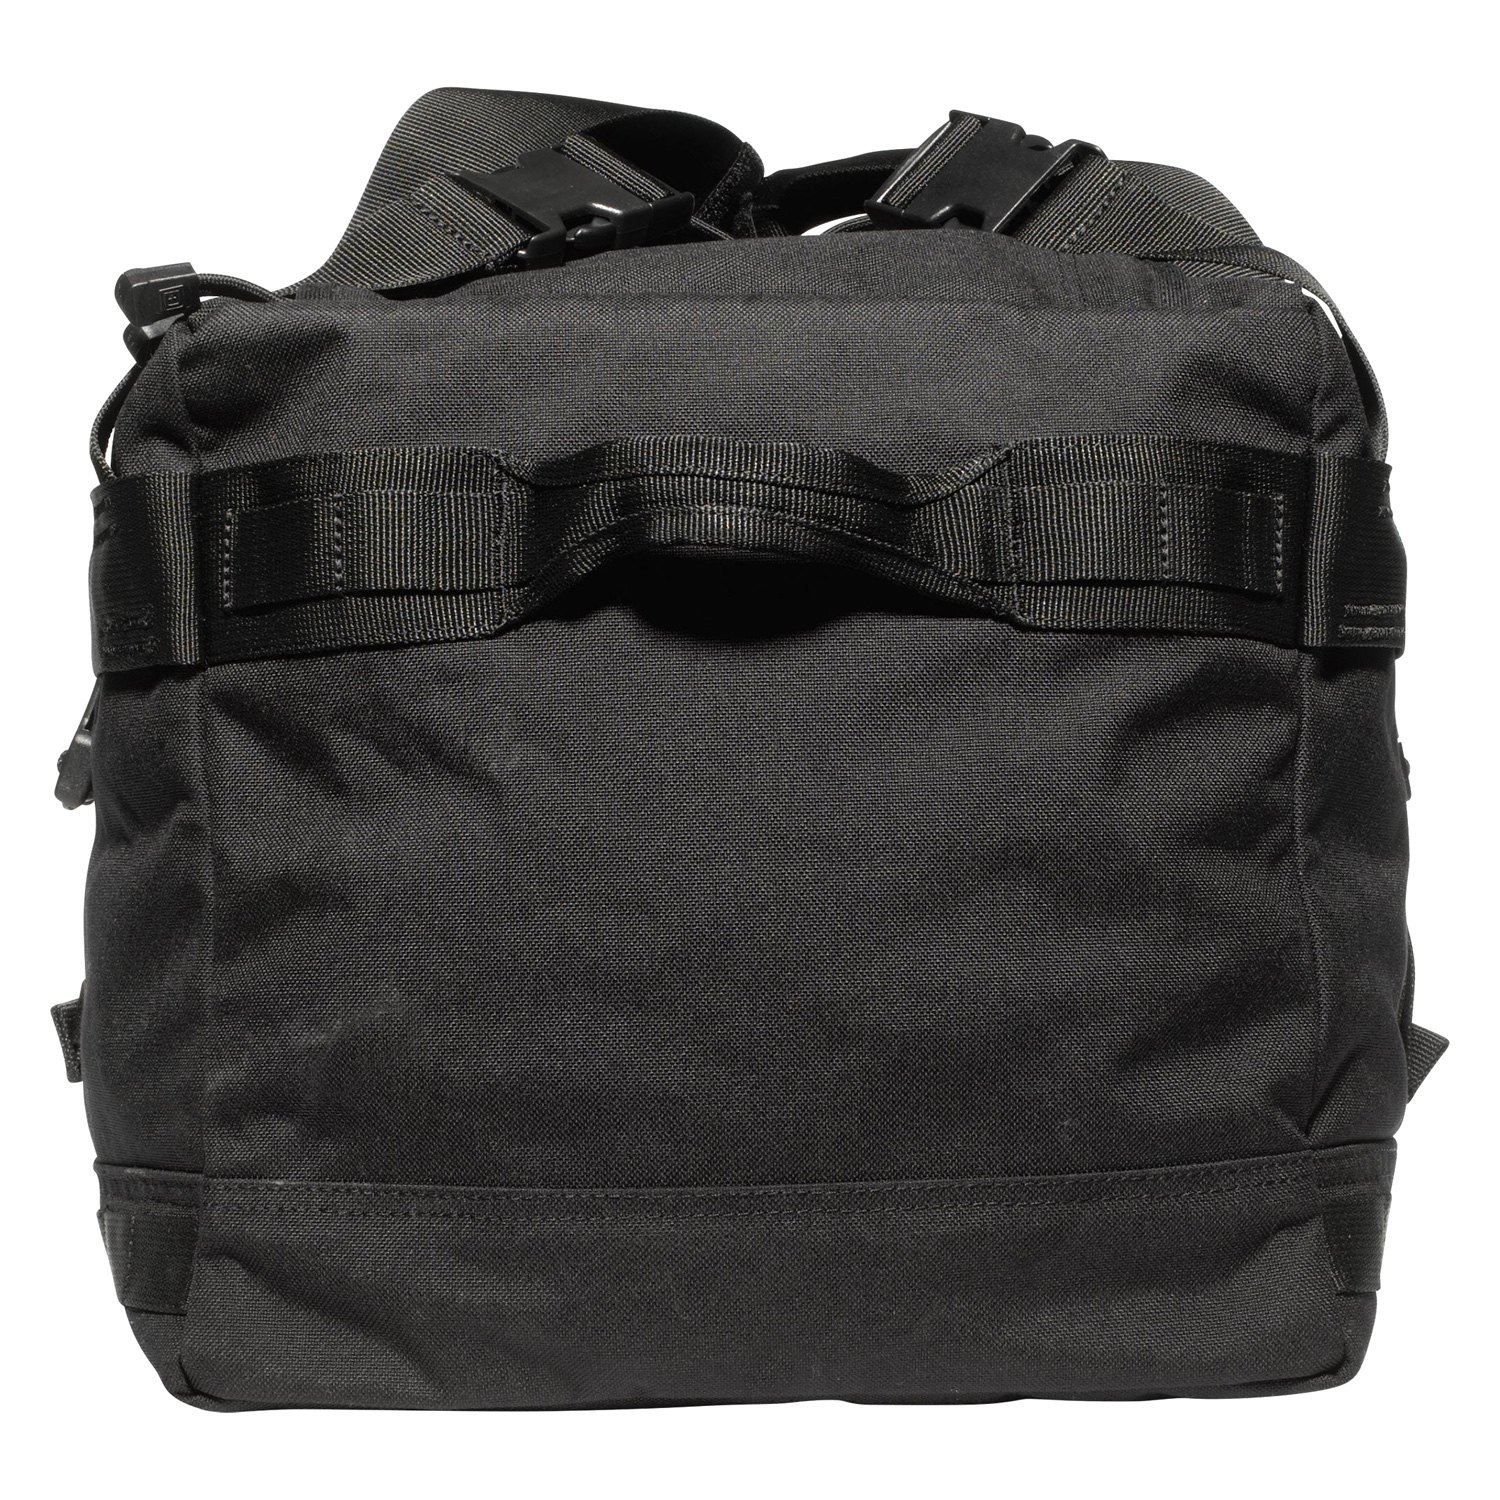 RUSH LBD LIMA 56L: Heavy-duty Duffel Bag/Backpack